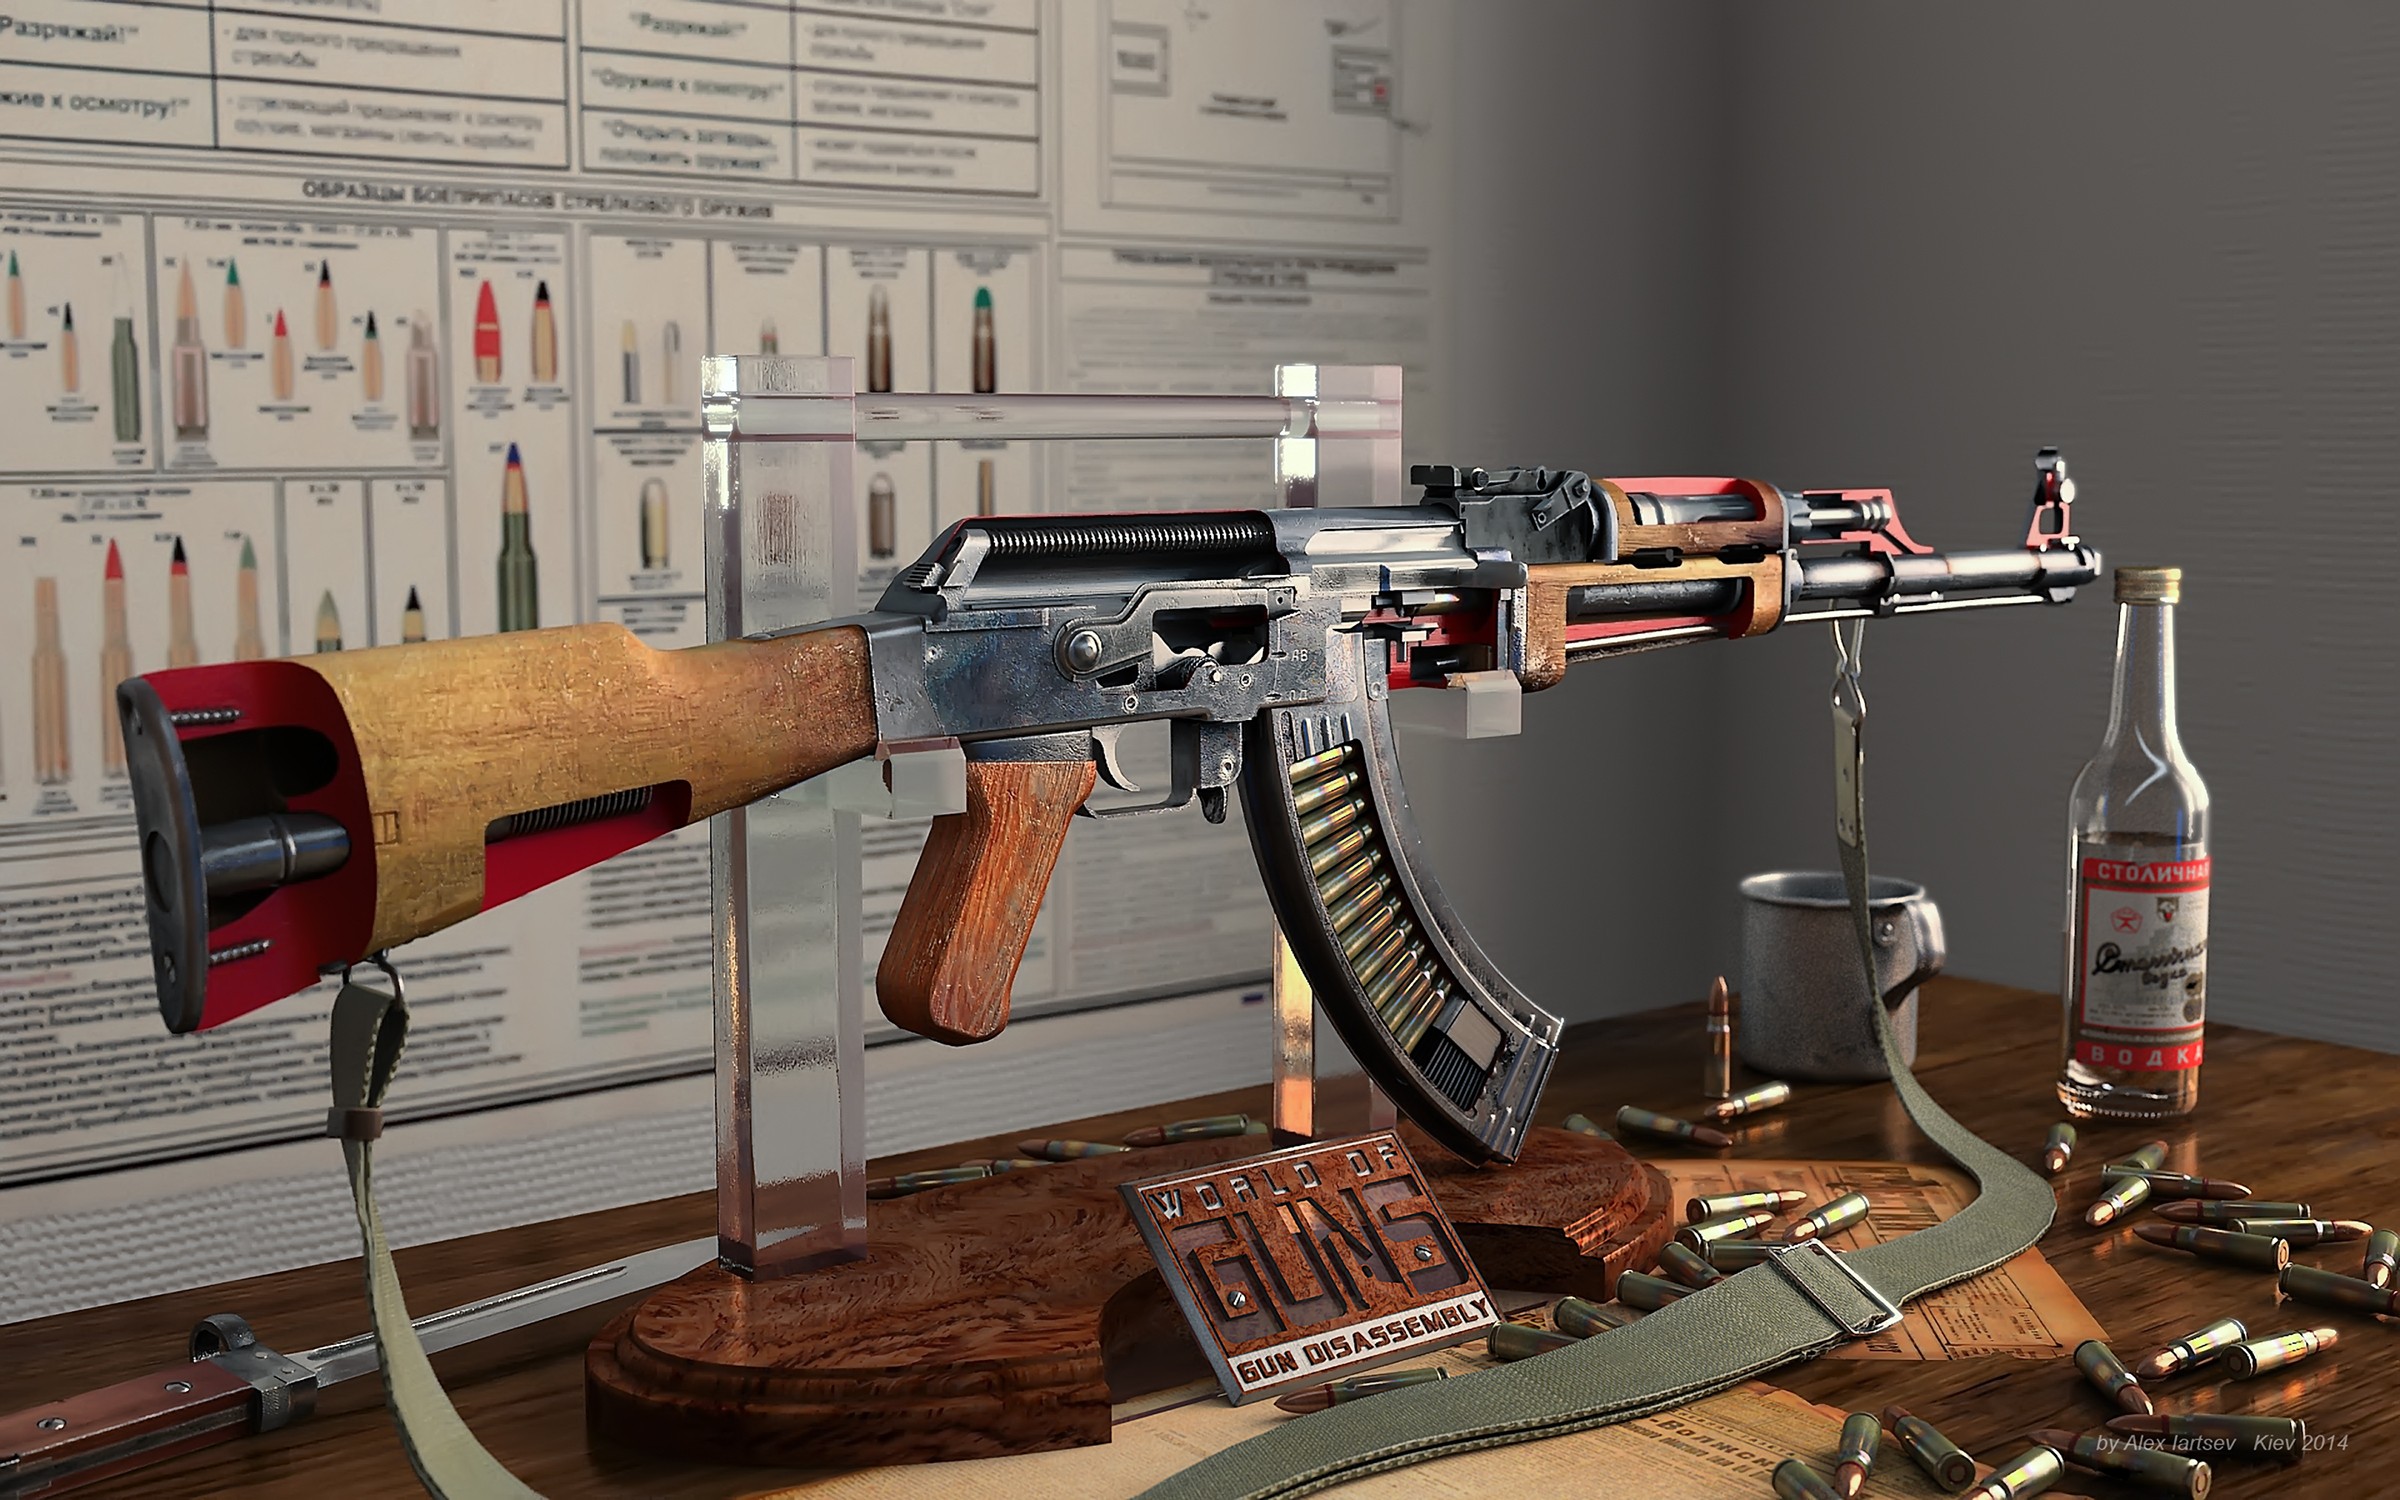 General 2400x1500 gun vodka AKM AK-47 military watermarked 2014 (Year)